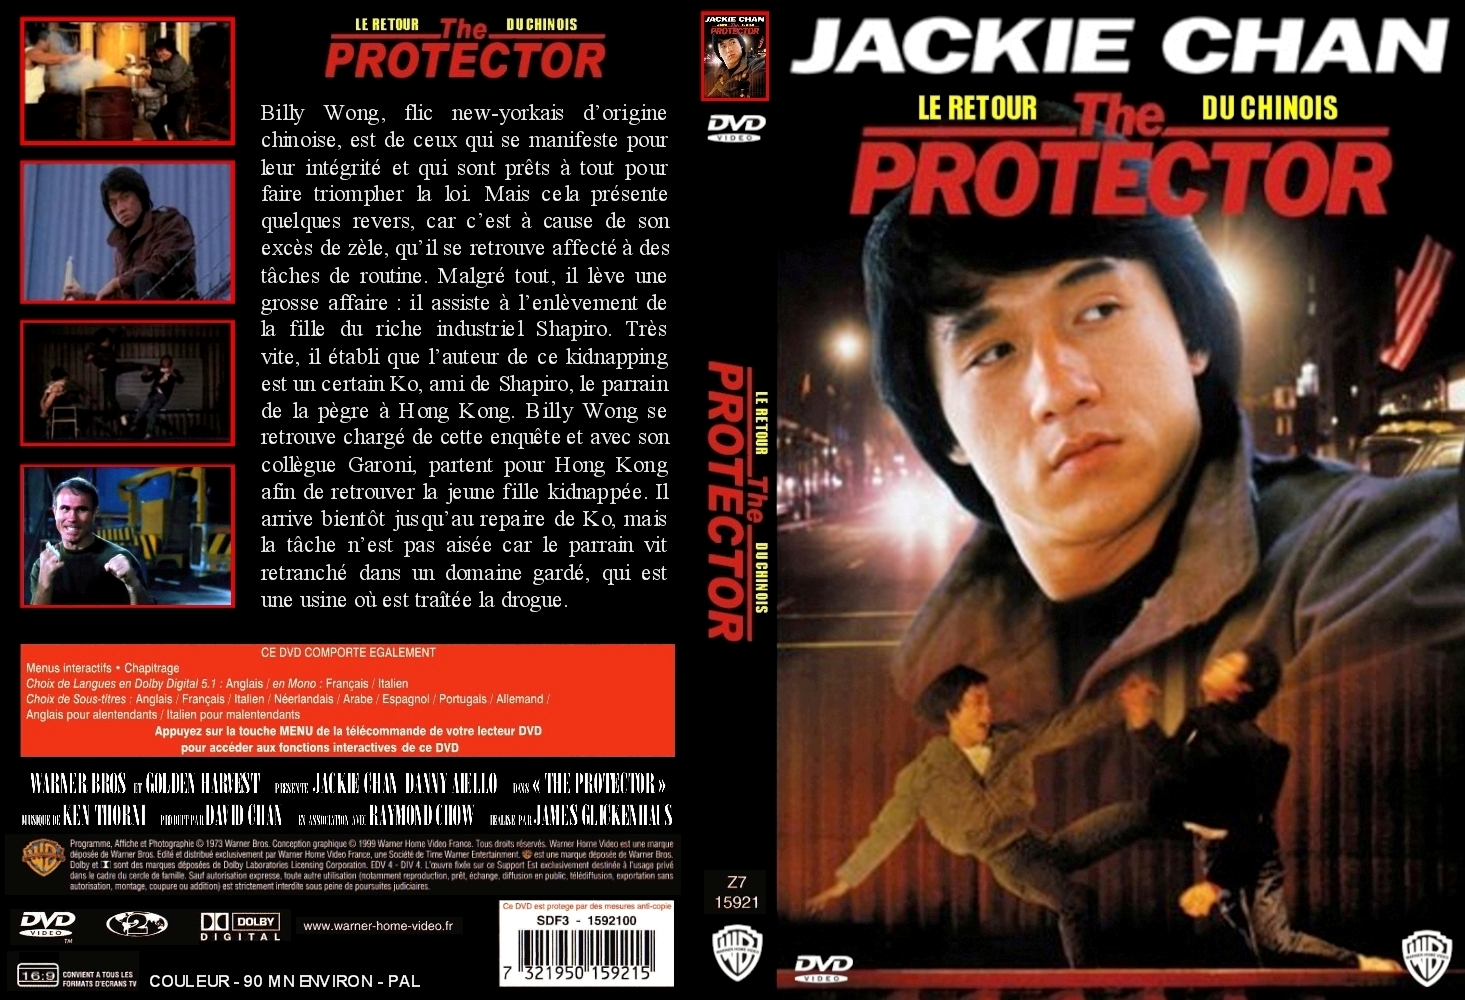 Jaquette DVD Le retour du chinois (The Protector) custom